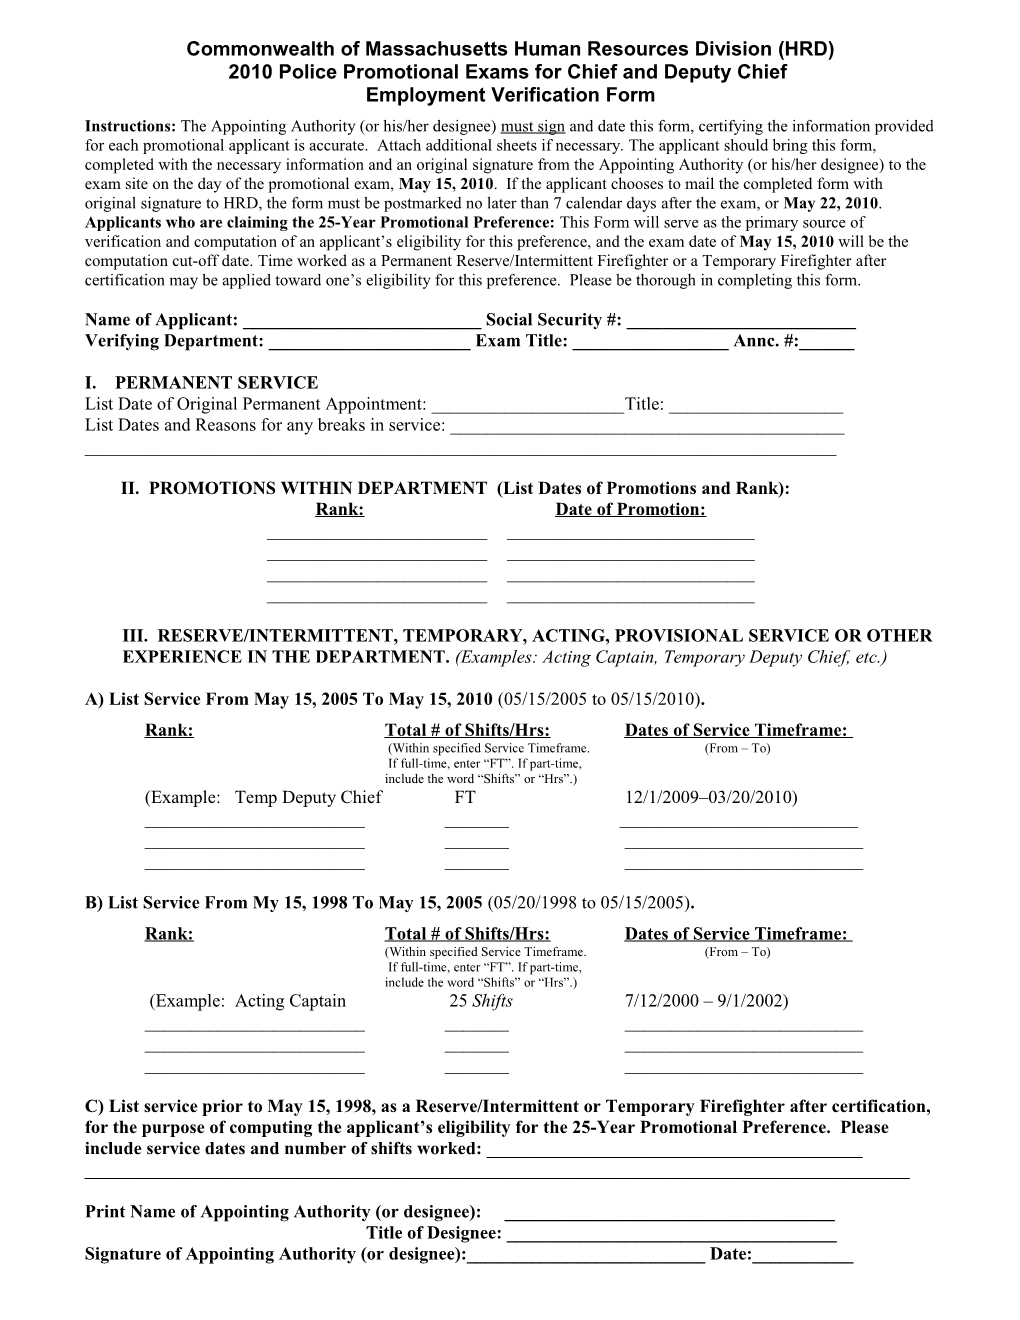 2010 Police Chief & Deputy Police Chief Exam Employment Verification Form